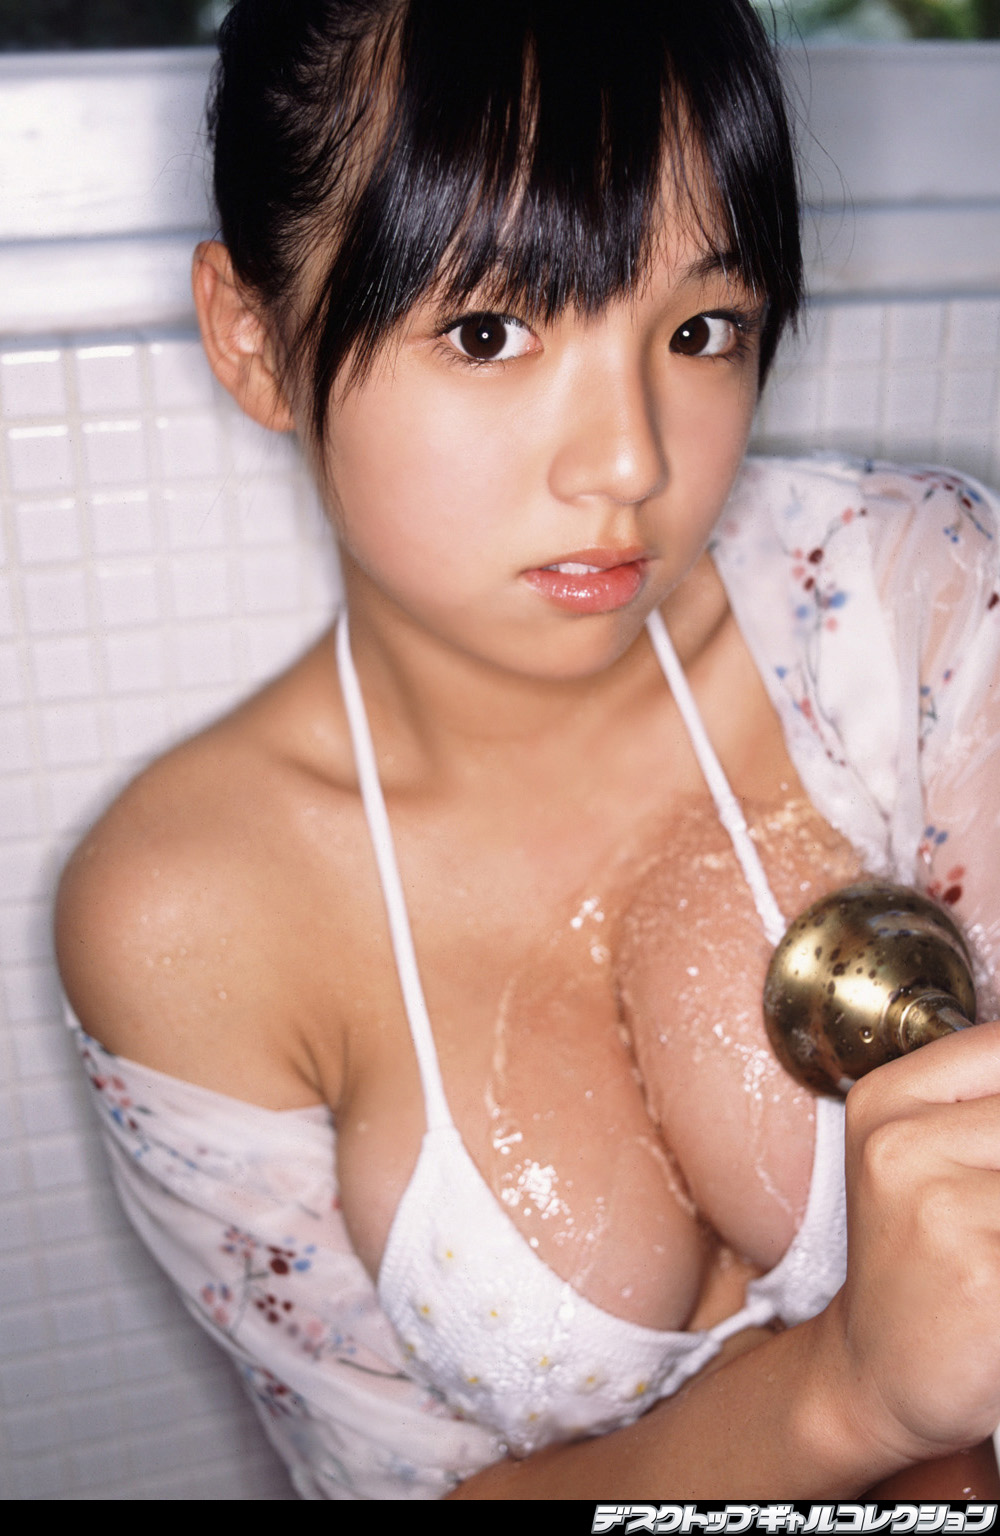 Ai Shinozaki in a tiny bikini taking a shower all wet breasts tits ass legs